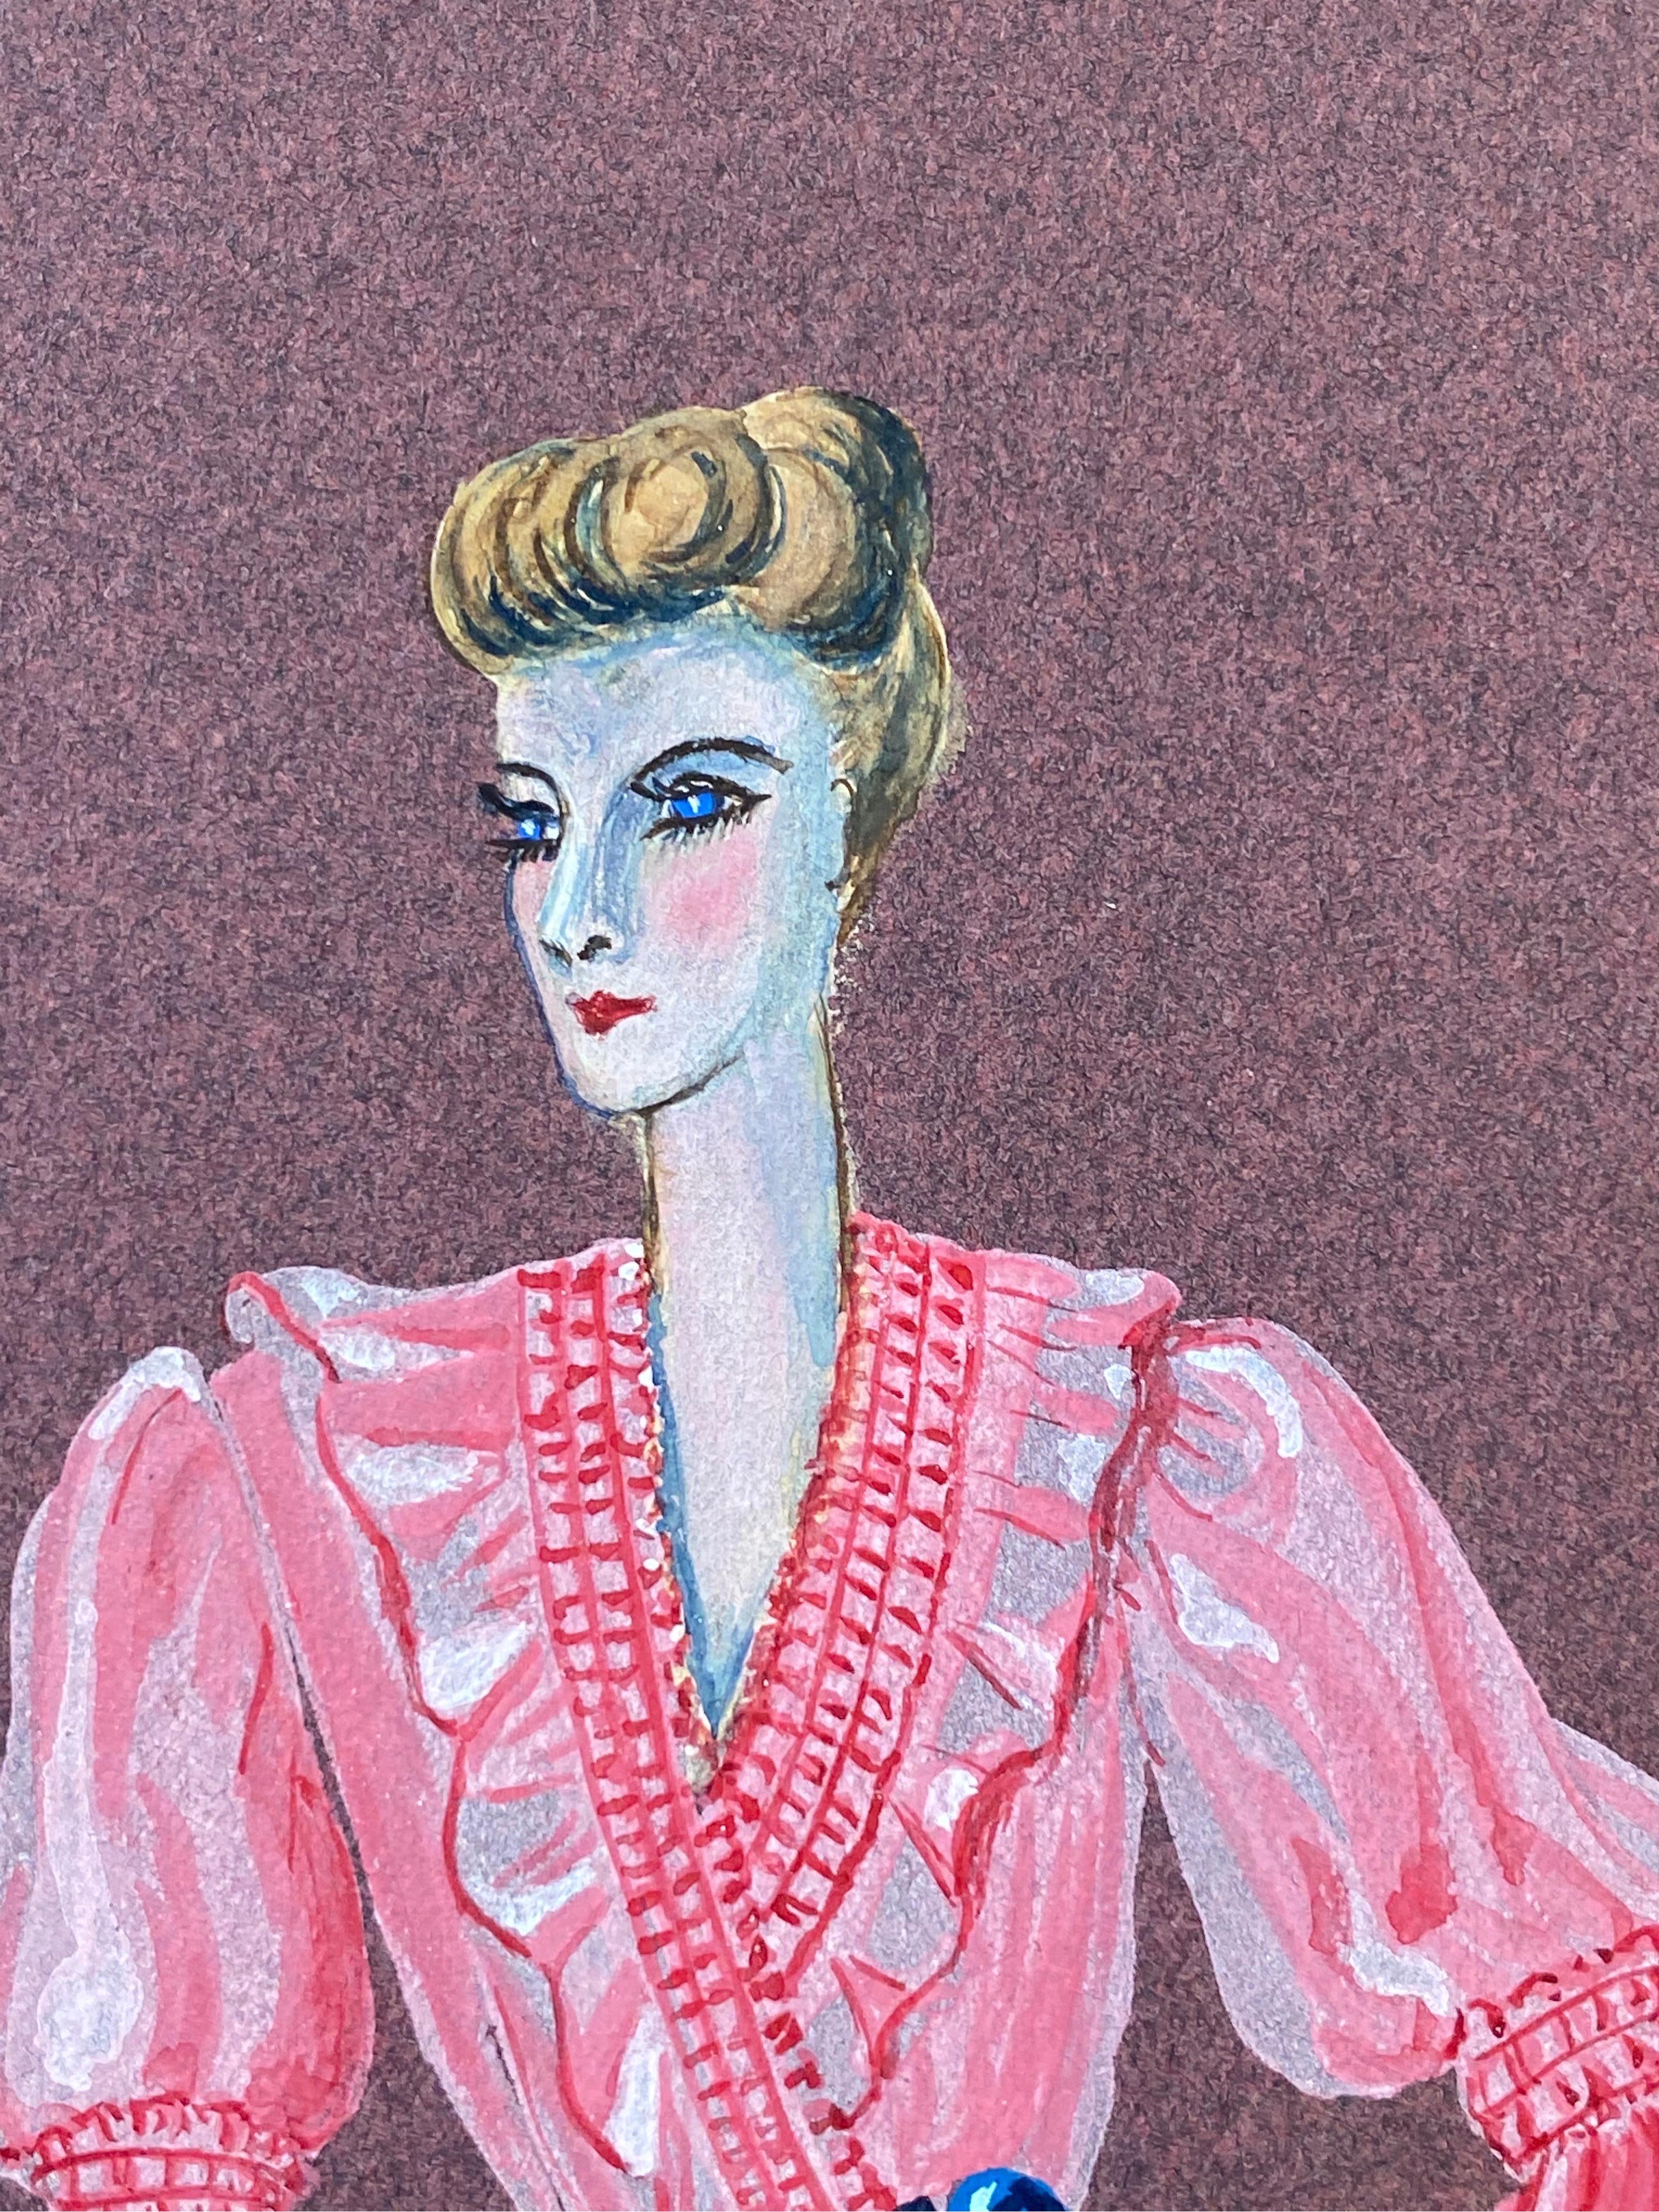 1940's Fashion Illustration - Posed Lady In Vibrant Pink Dress - Impressionist Art by Geneviève Thomas